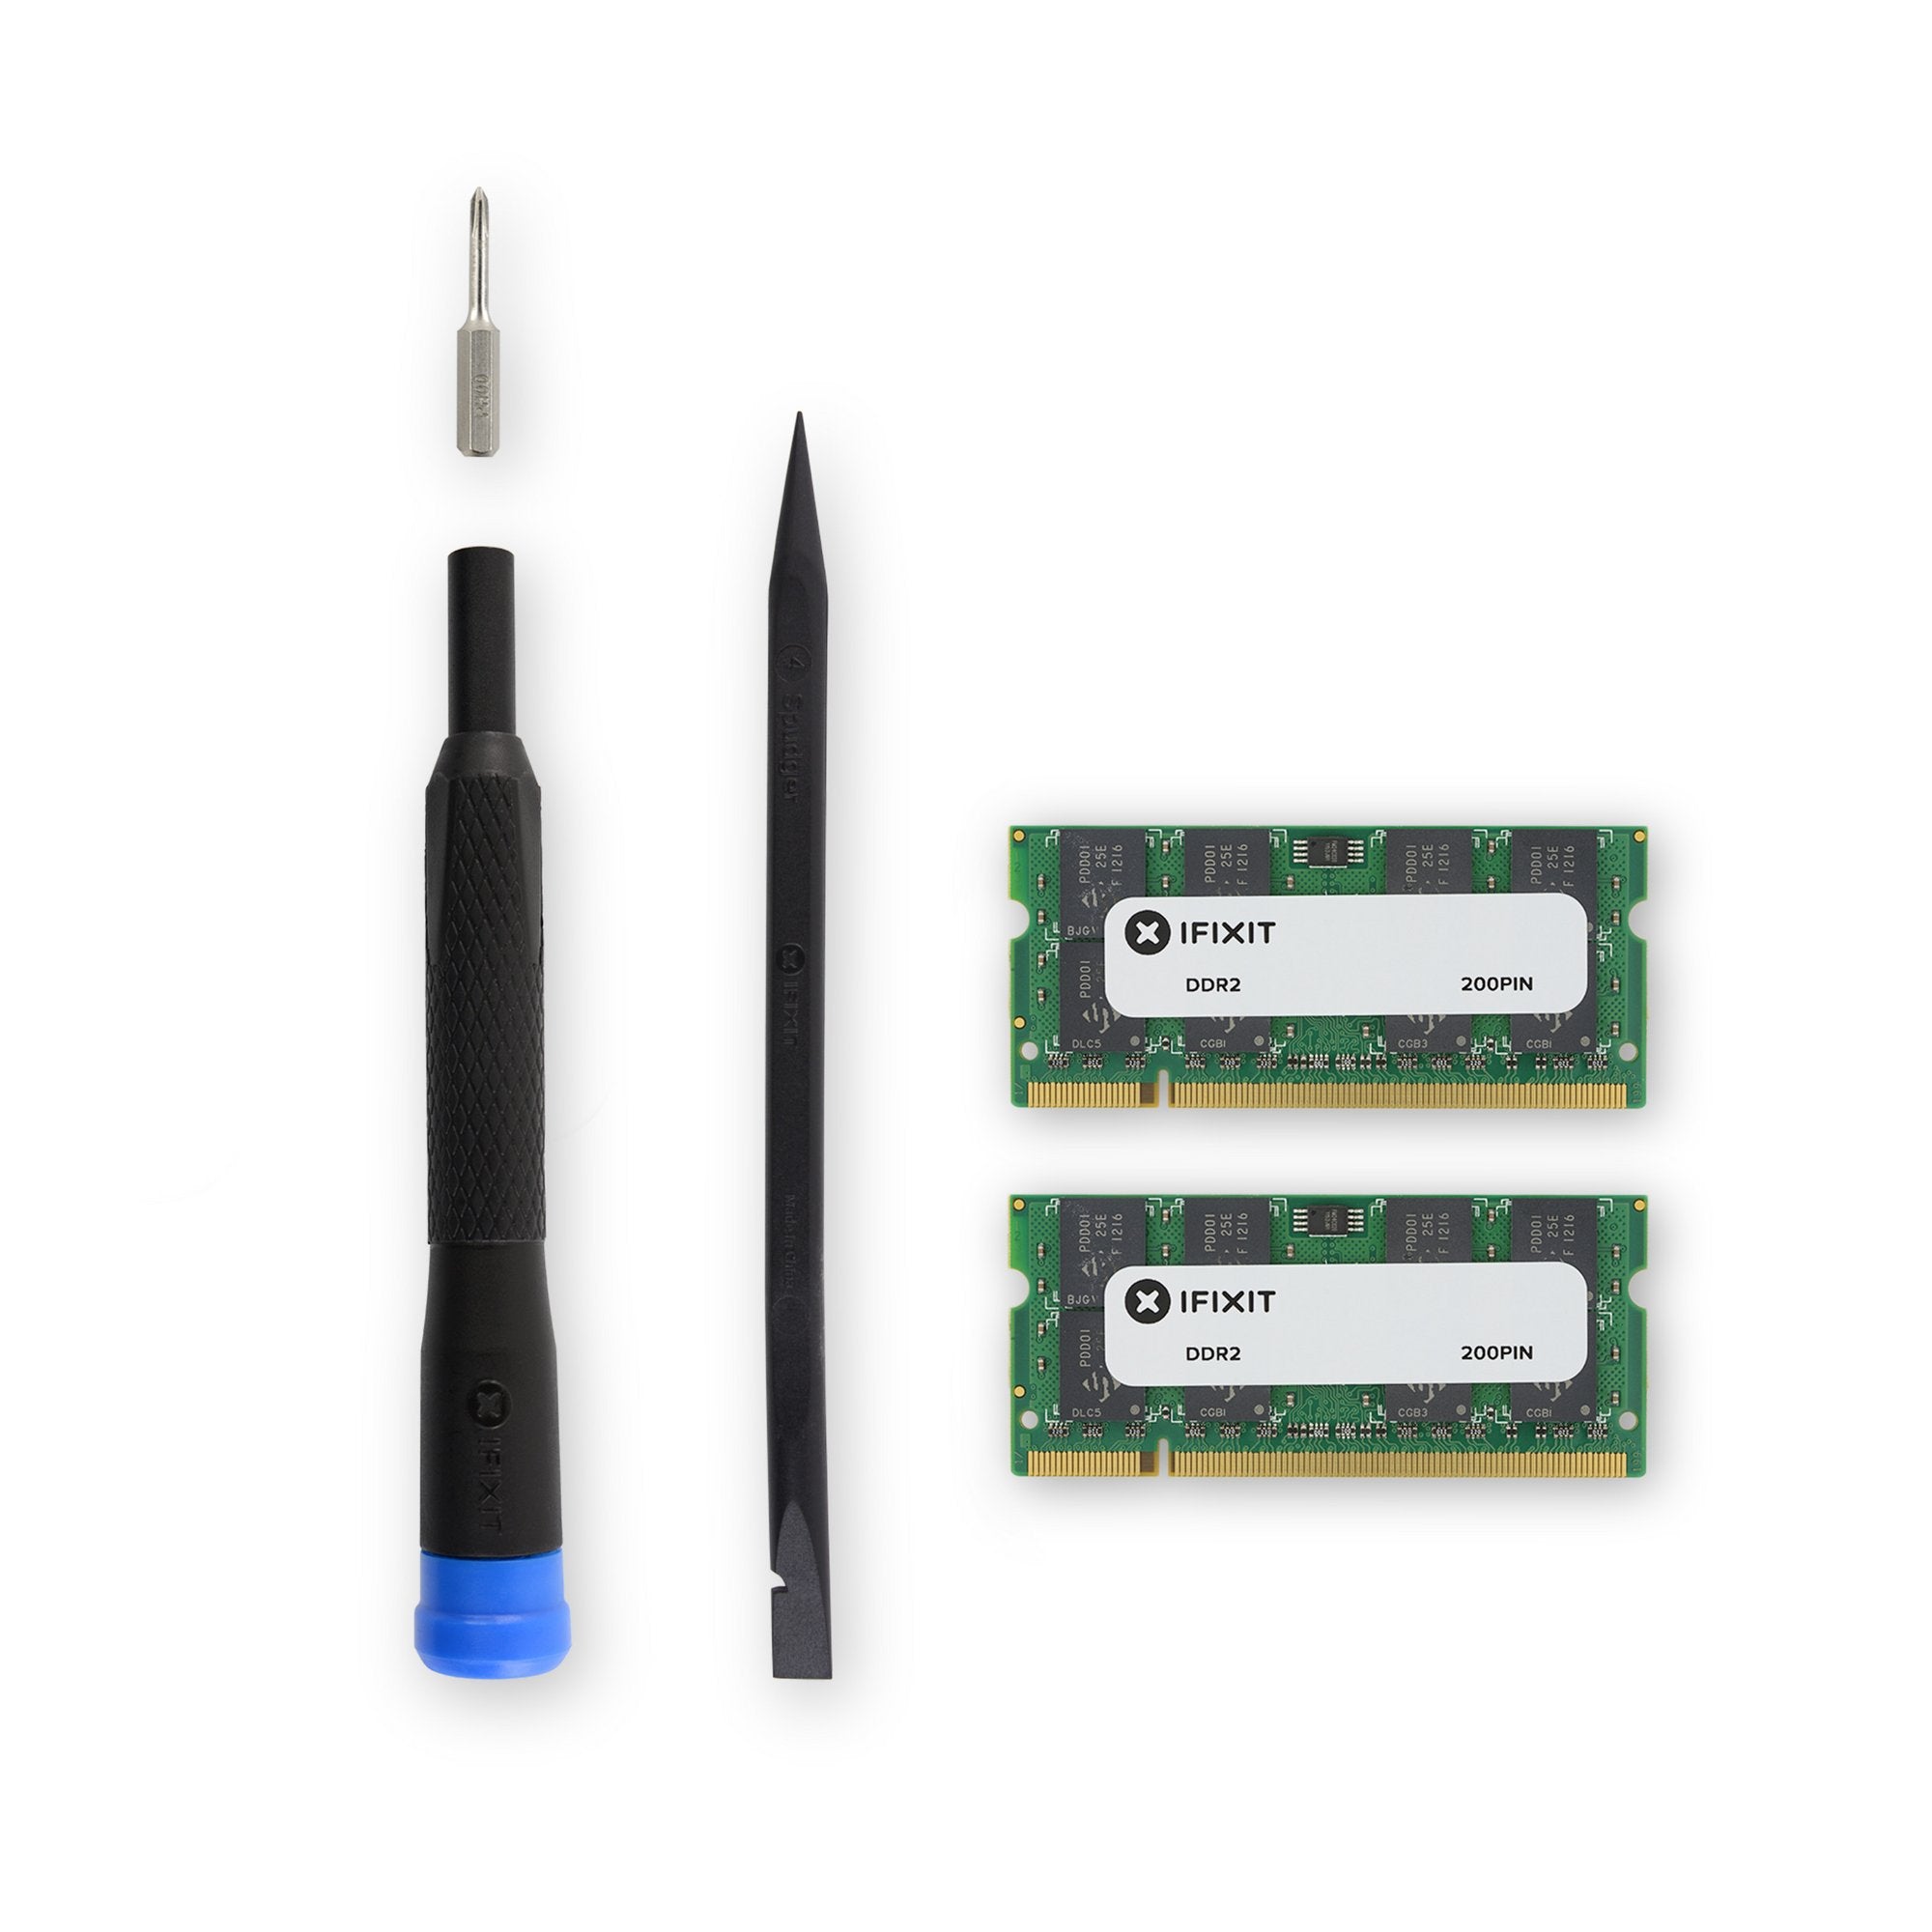 MacBook Pro 15" Model A1260 Memory Maxxer RAM Upgrade Kit